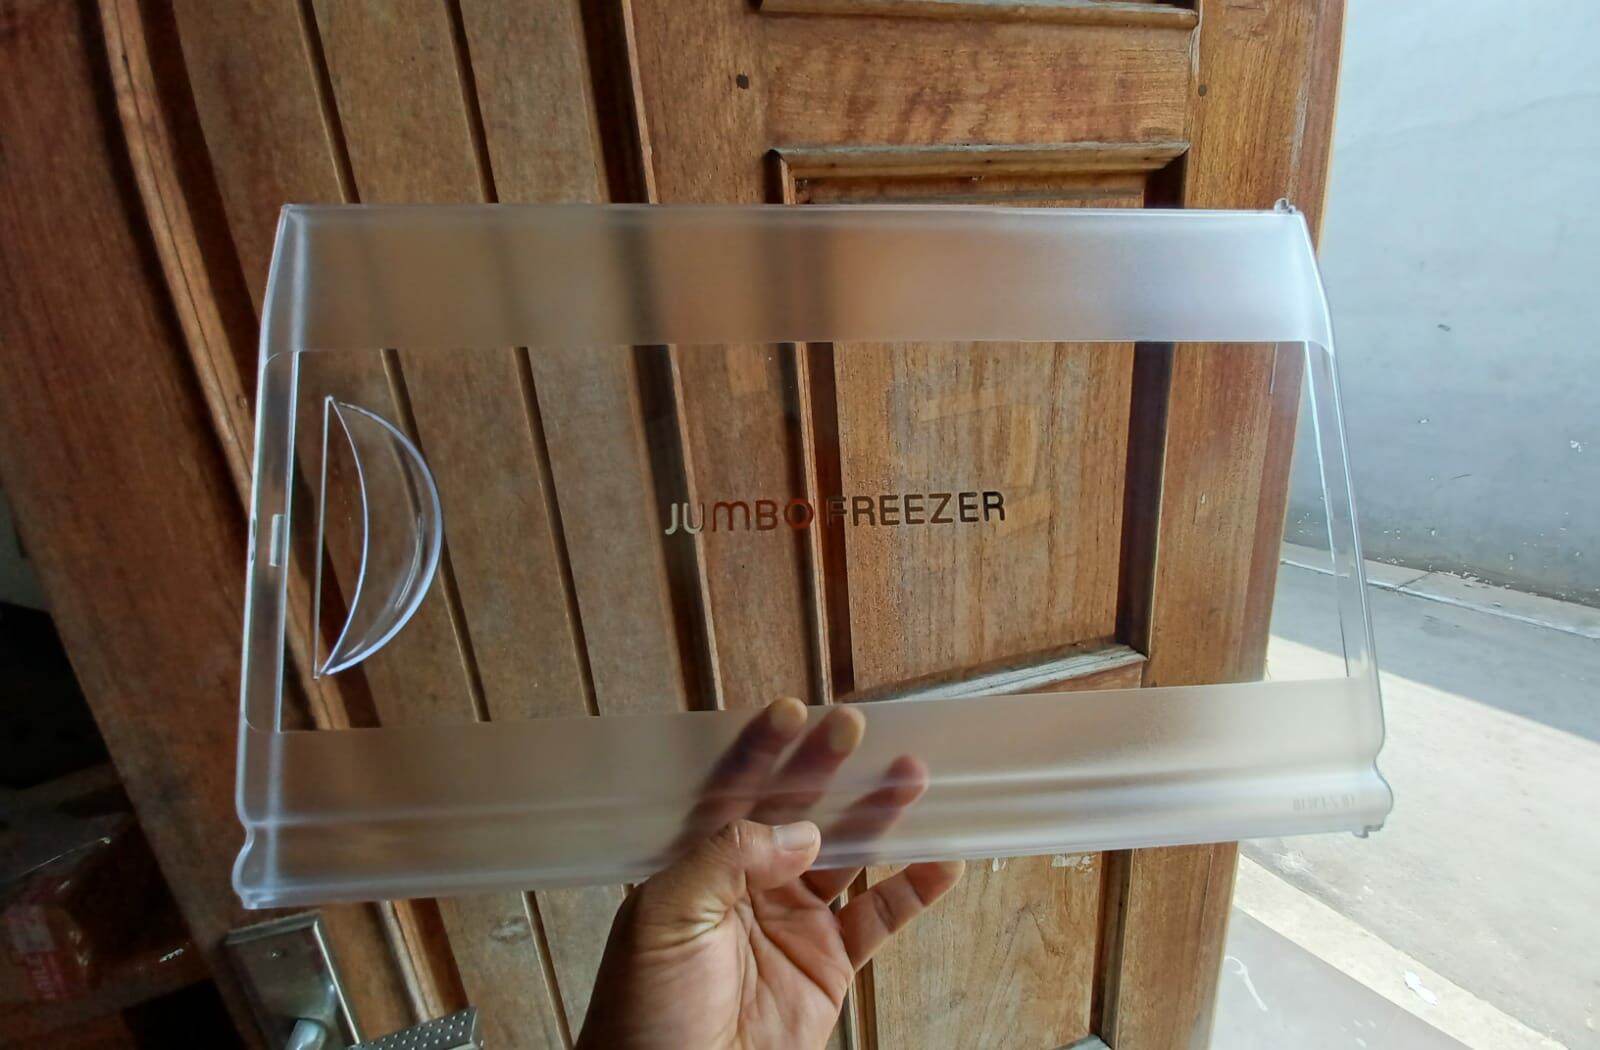 Jual POLYTRON Pcf 317 Chest Freezer Box [300 L] di Seller Saerah Elektronik  - SUMBER MURAHH - Kota Surakarta (Solo)